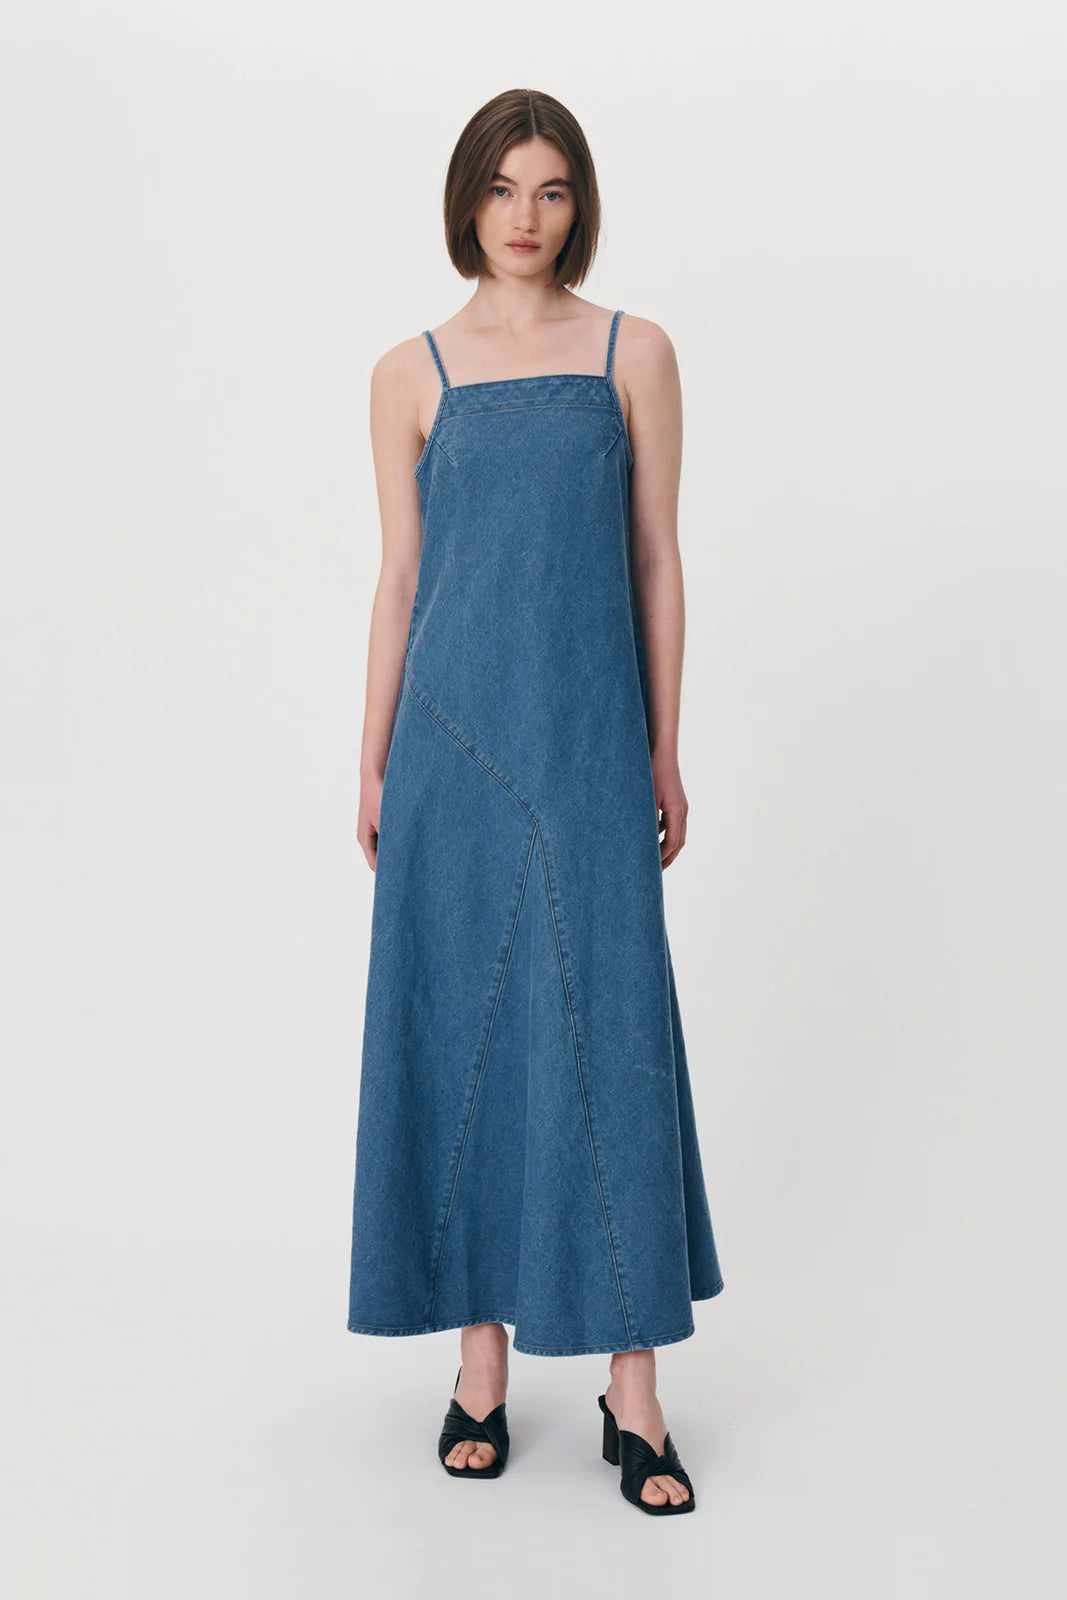 Nialley Organic Maxi Dress Classic Denim